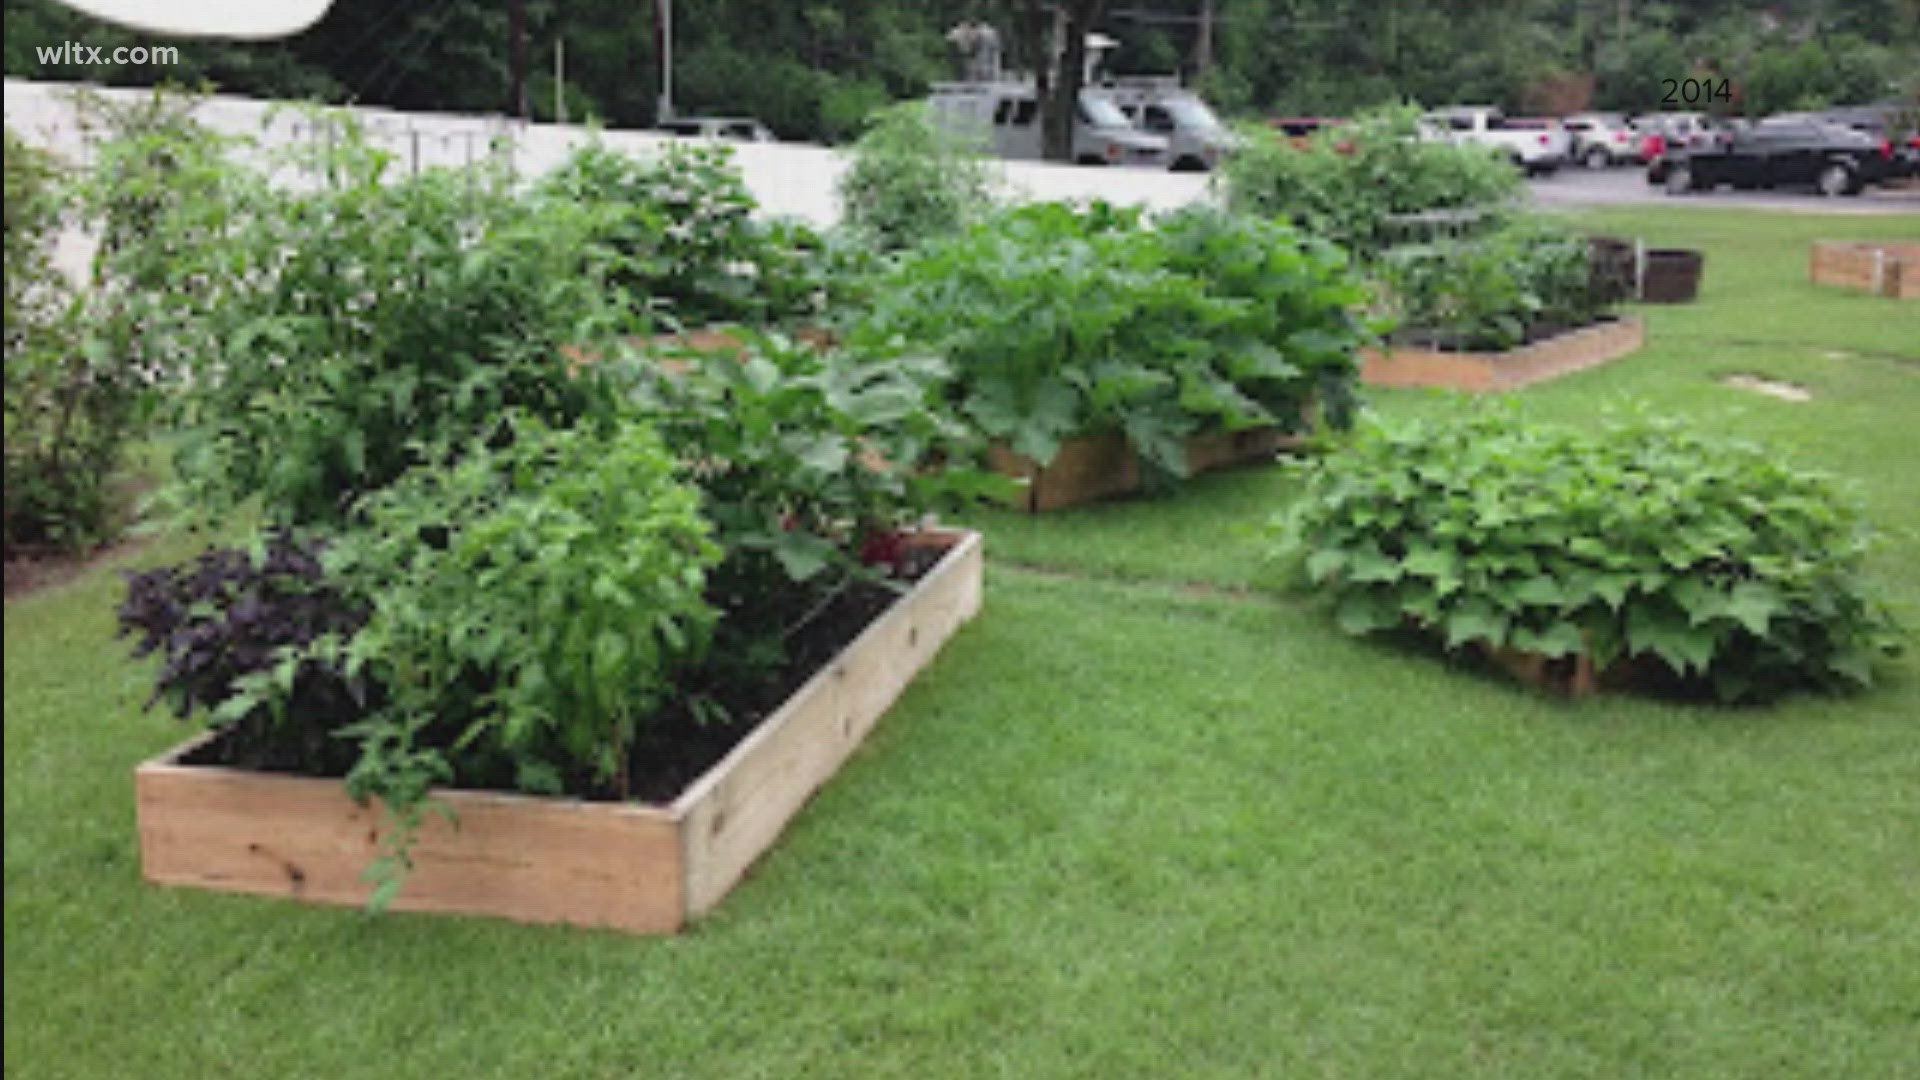 South Carolina's meteorologist began the garden at WLTX ten years ago.